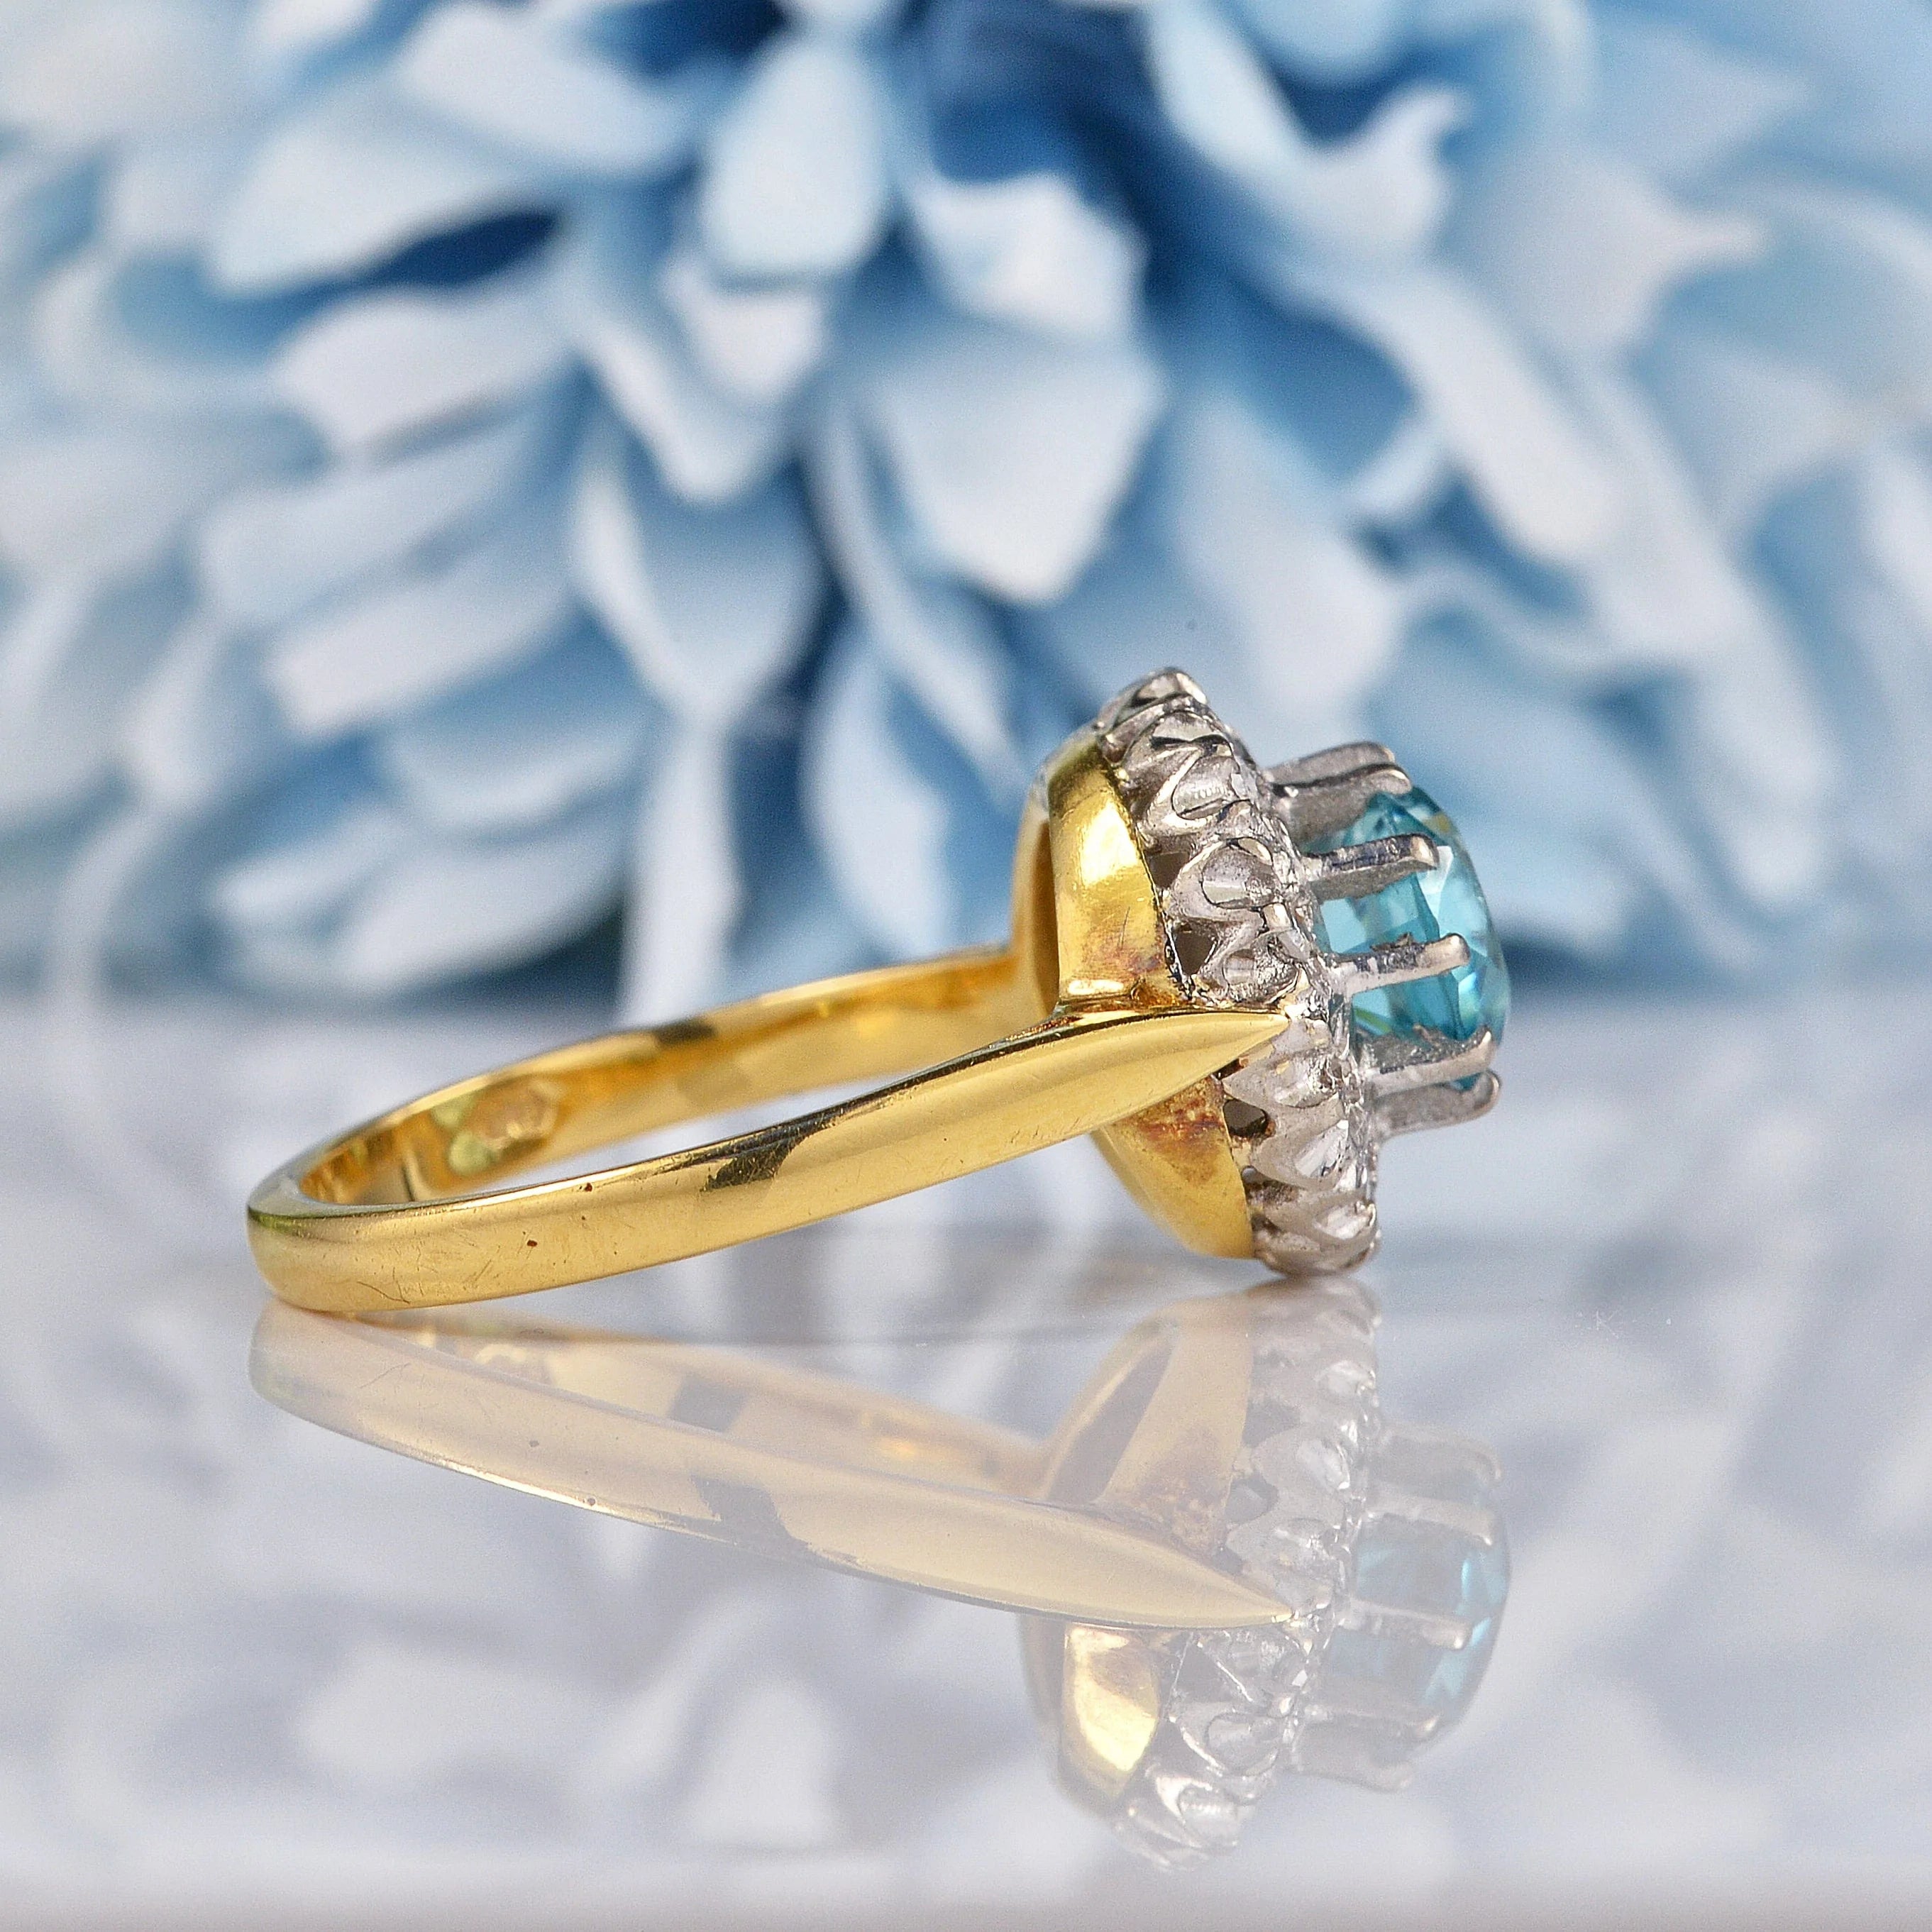 Ellibelle Jewellery Vintage 1974 Blue Zircon & Diamond 18ct Gold Cluster Ring